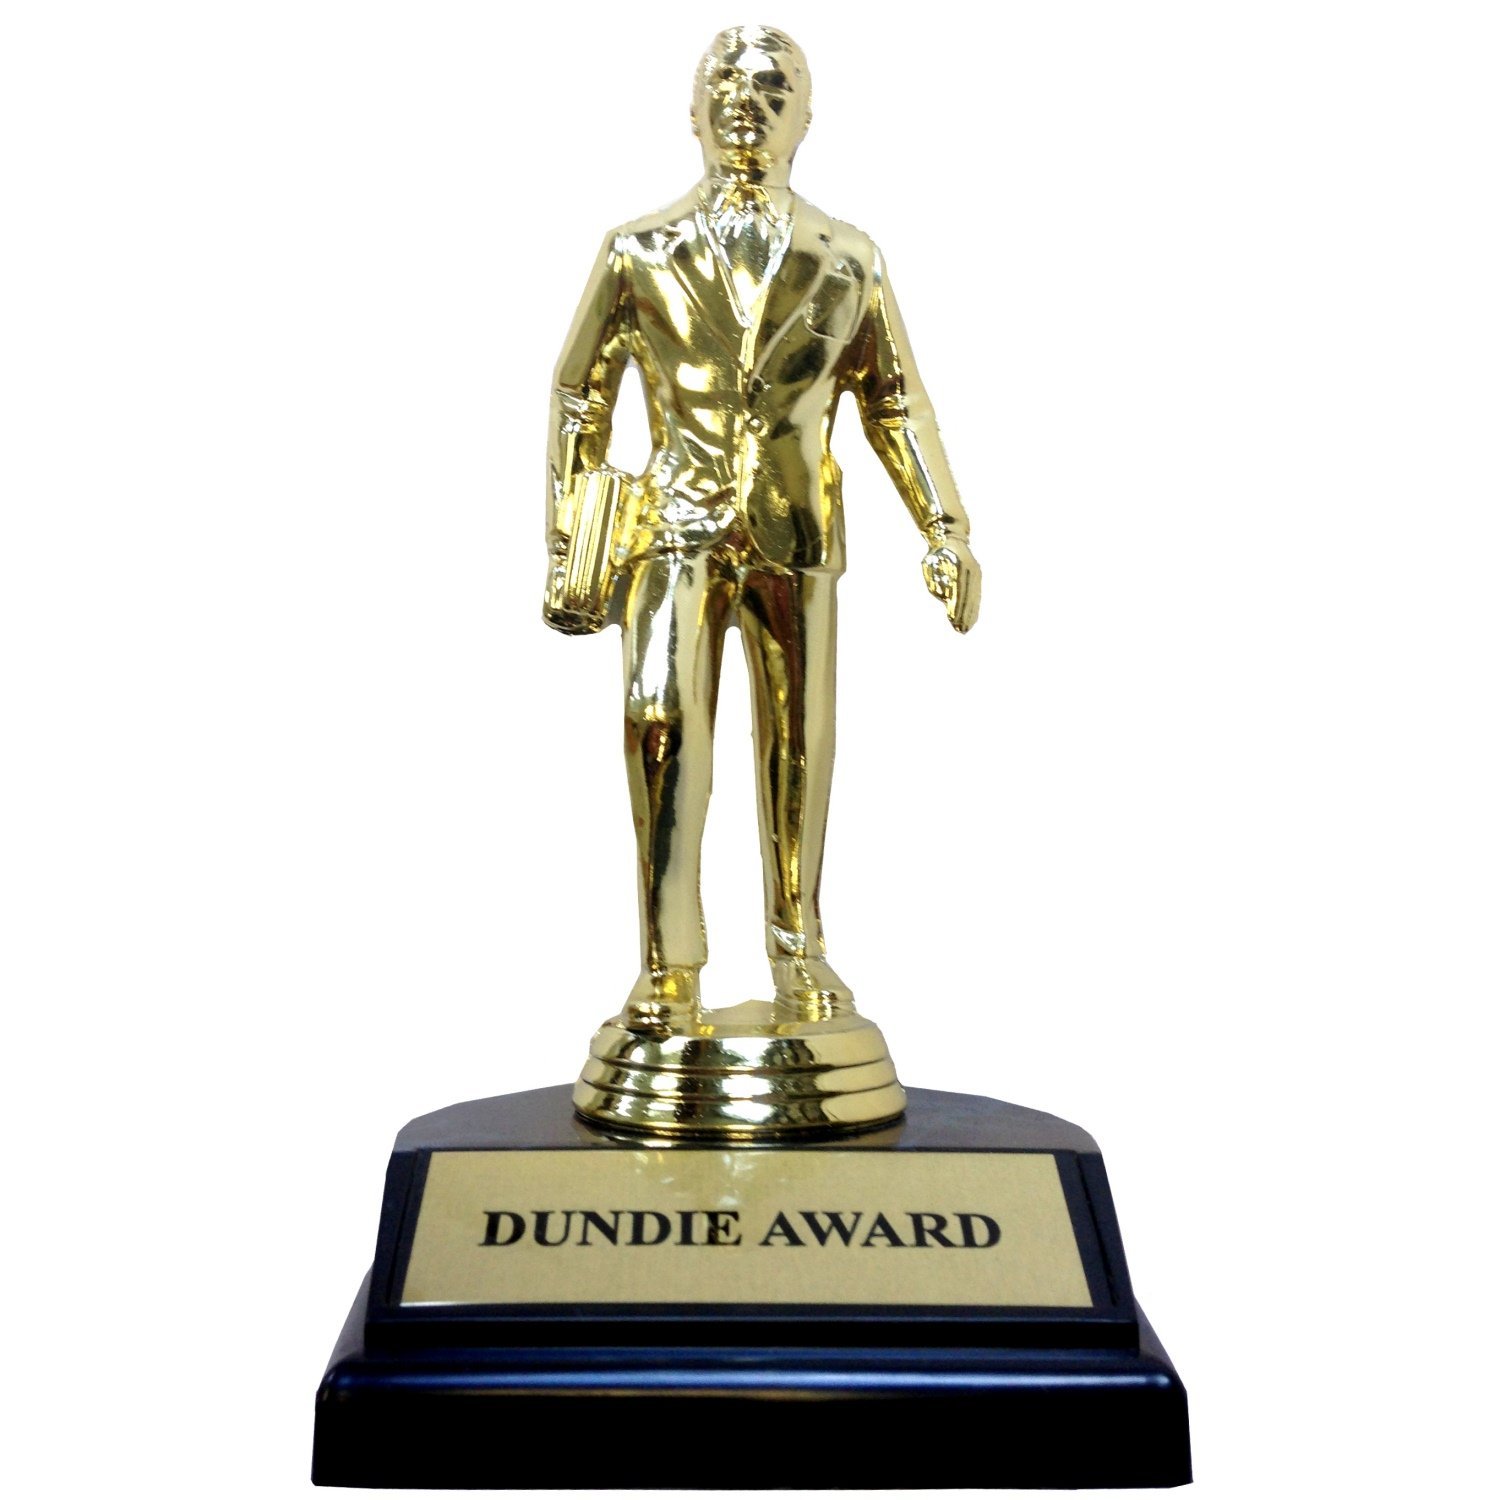 Amazon.com: MyPartyShirt Dundie Award Trophy: Clothing